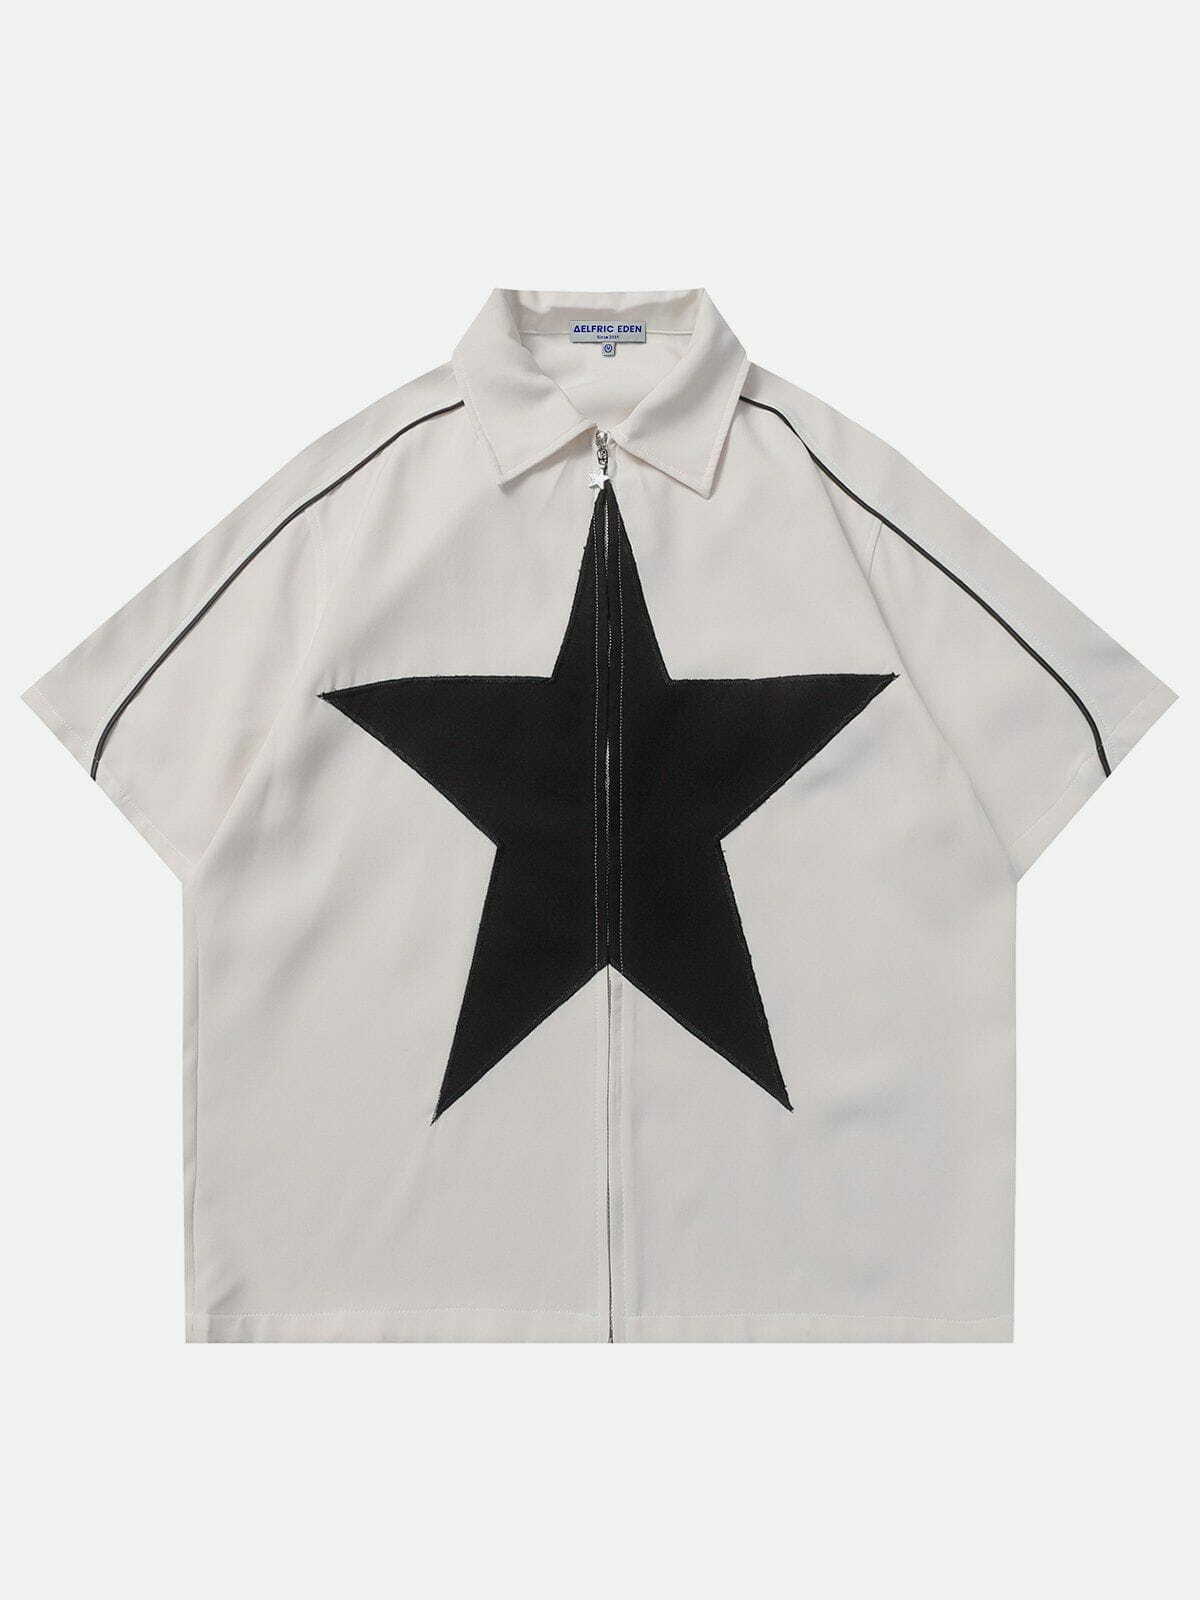 youthful star splicing shirts   chic & trendy streetwear 4119